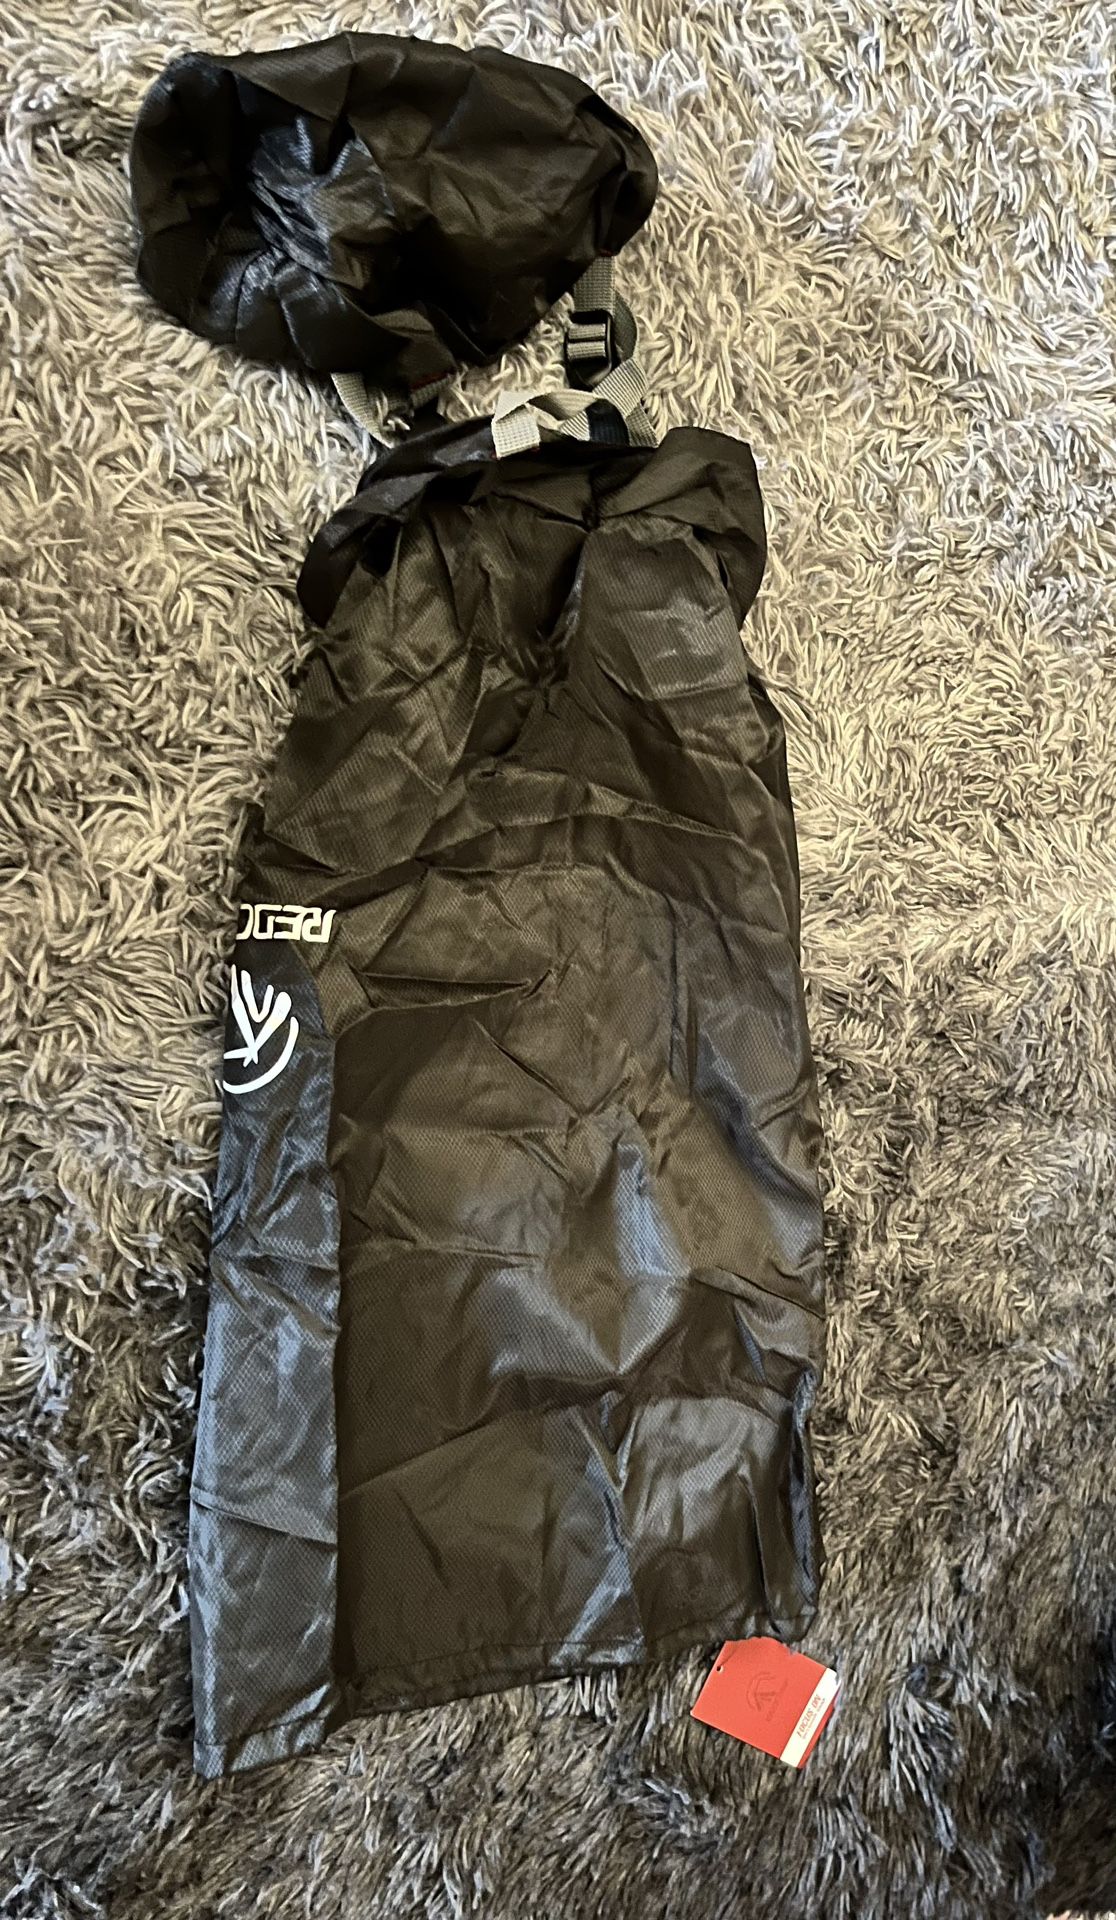 Compression Bag For Sleeping Bag